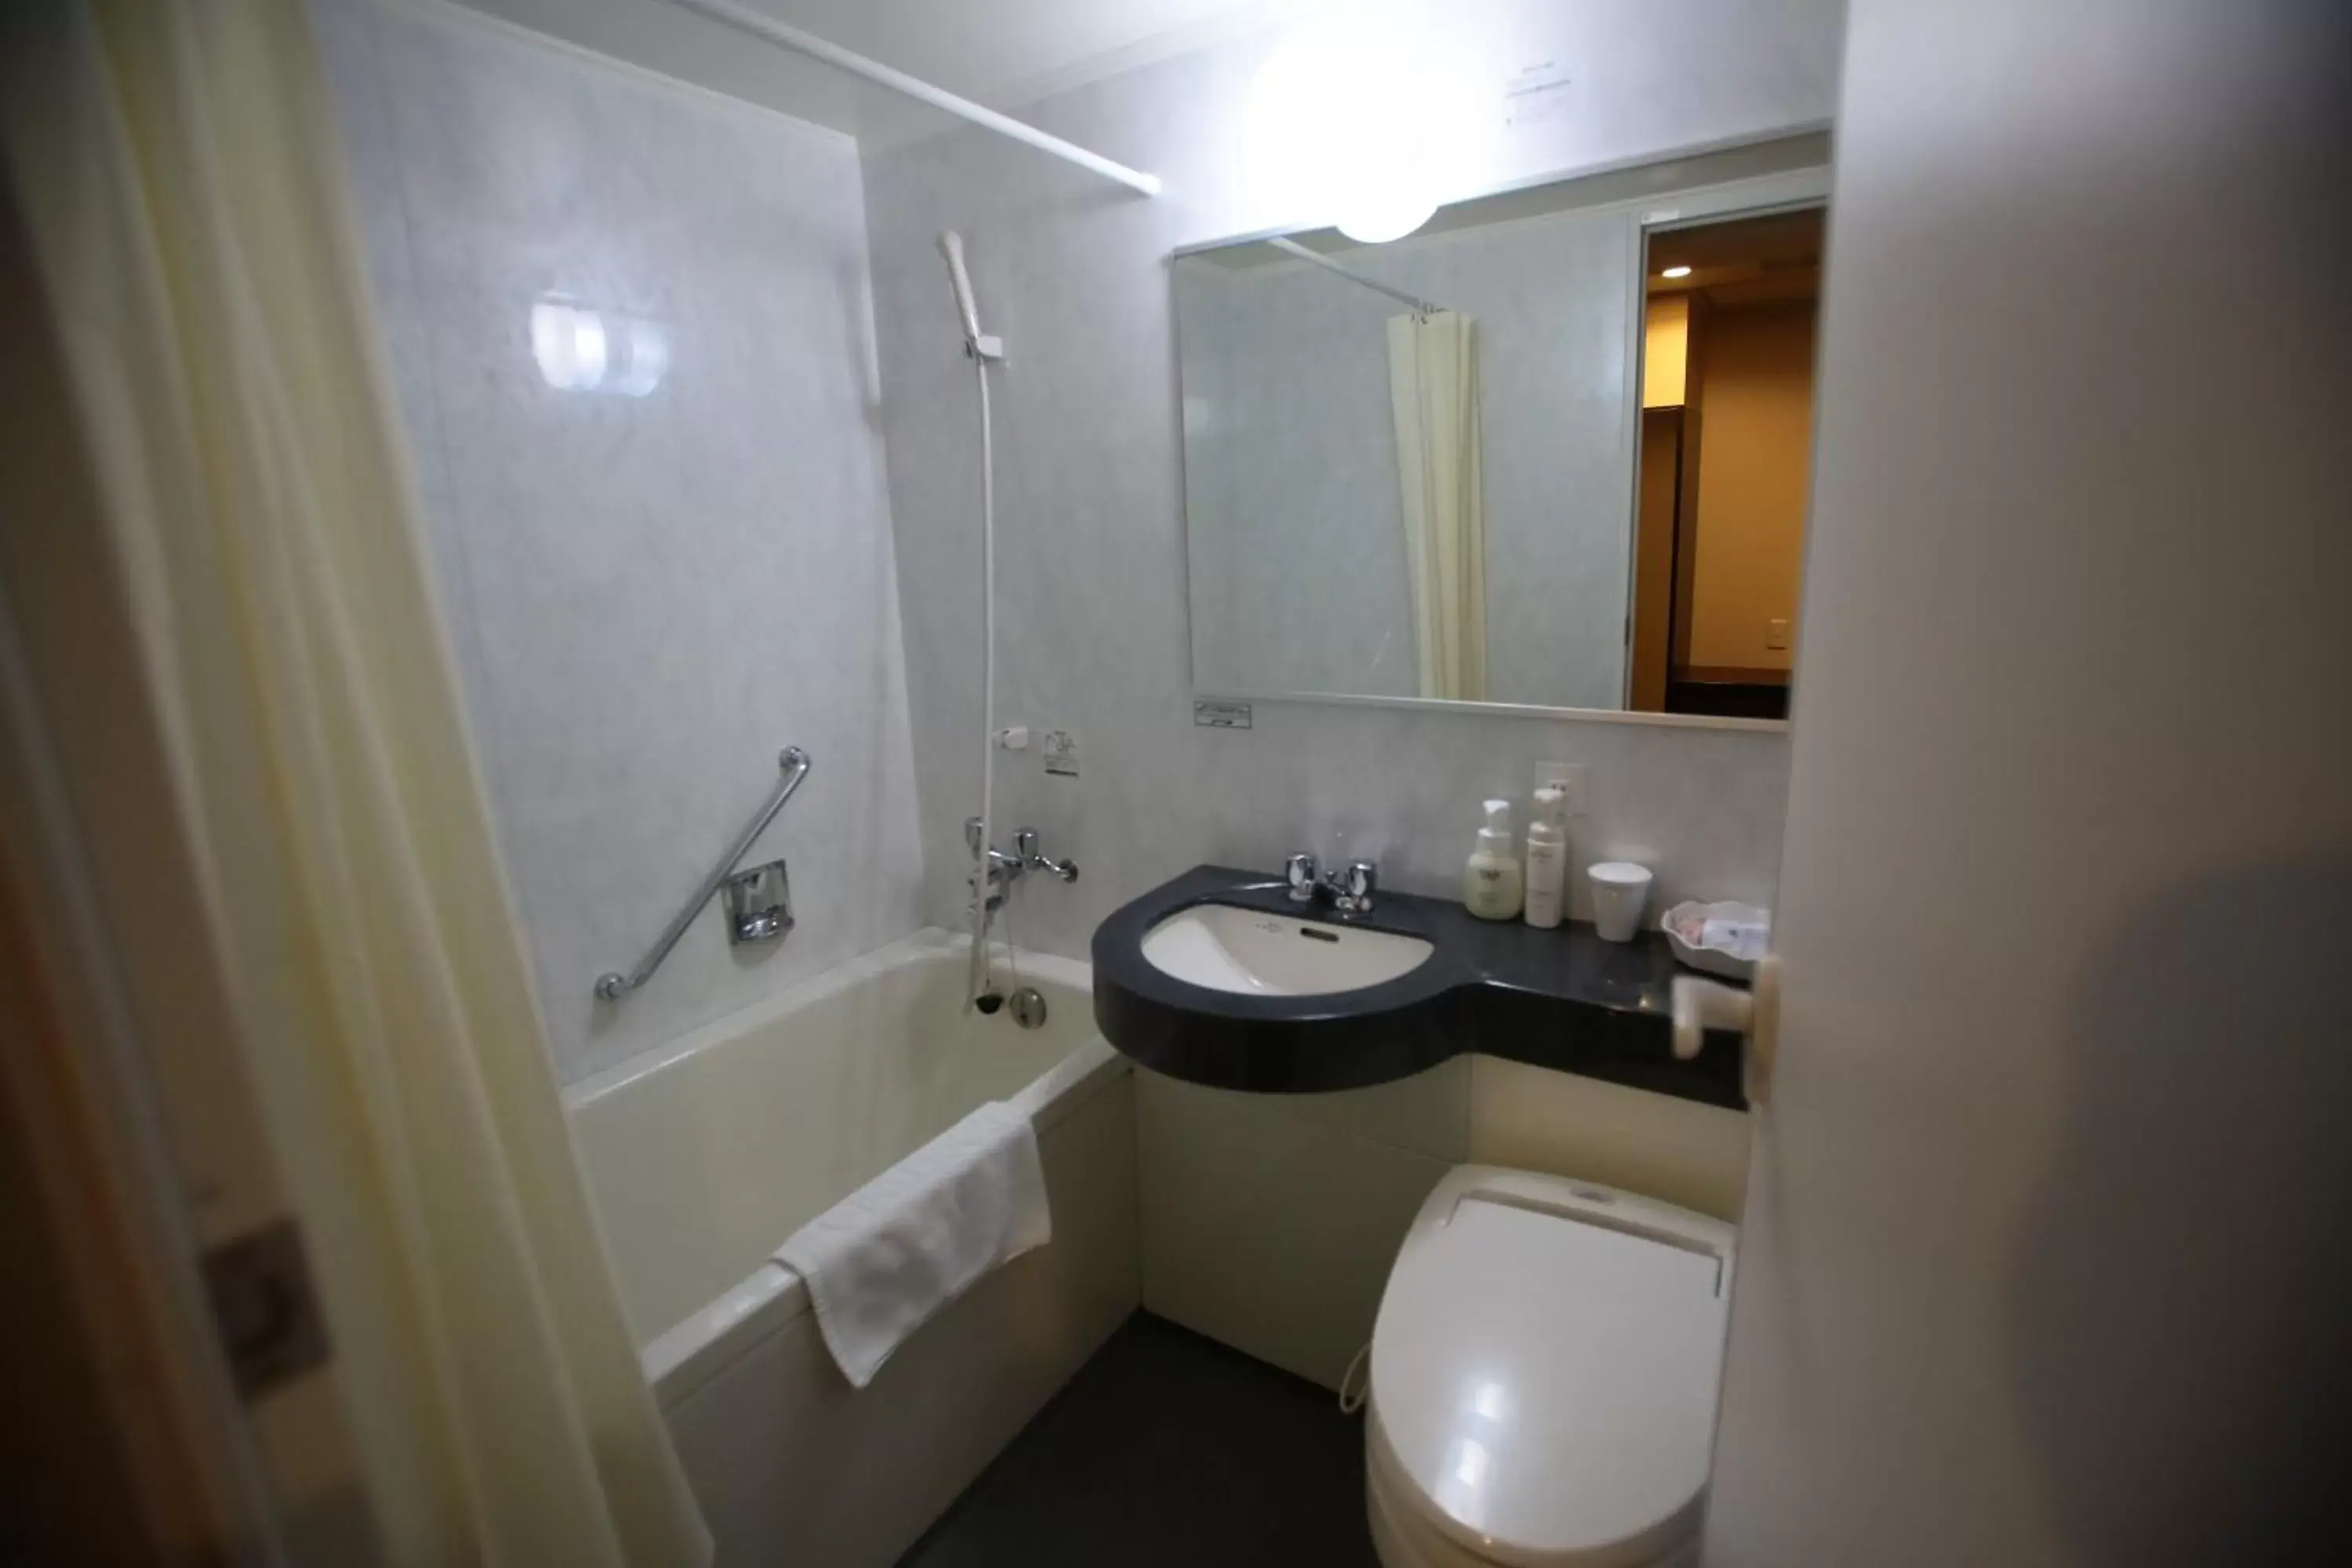 Photo of the whole room, Bathroom in International Hotel Ube